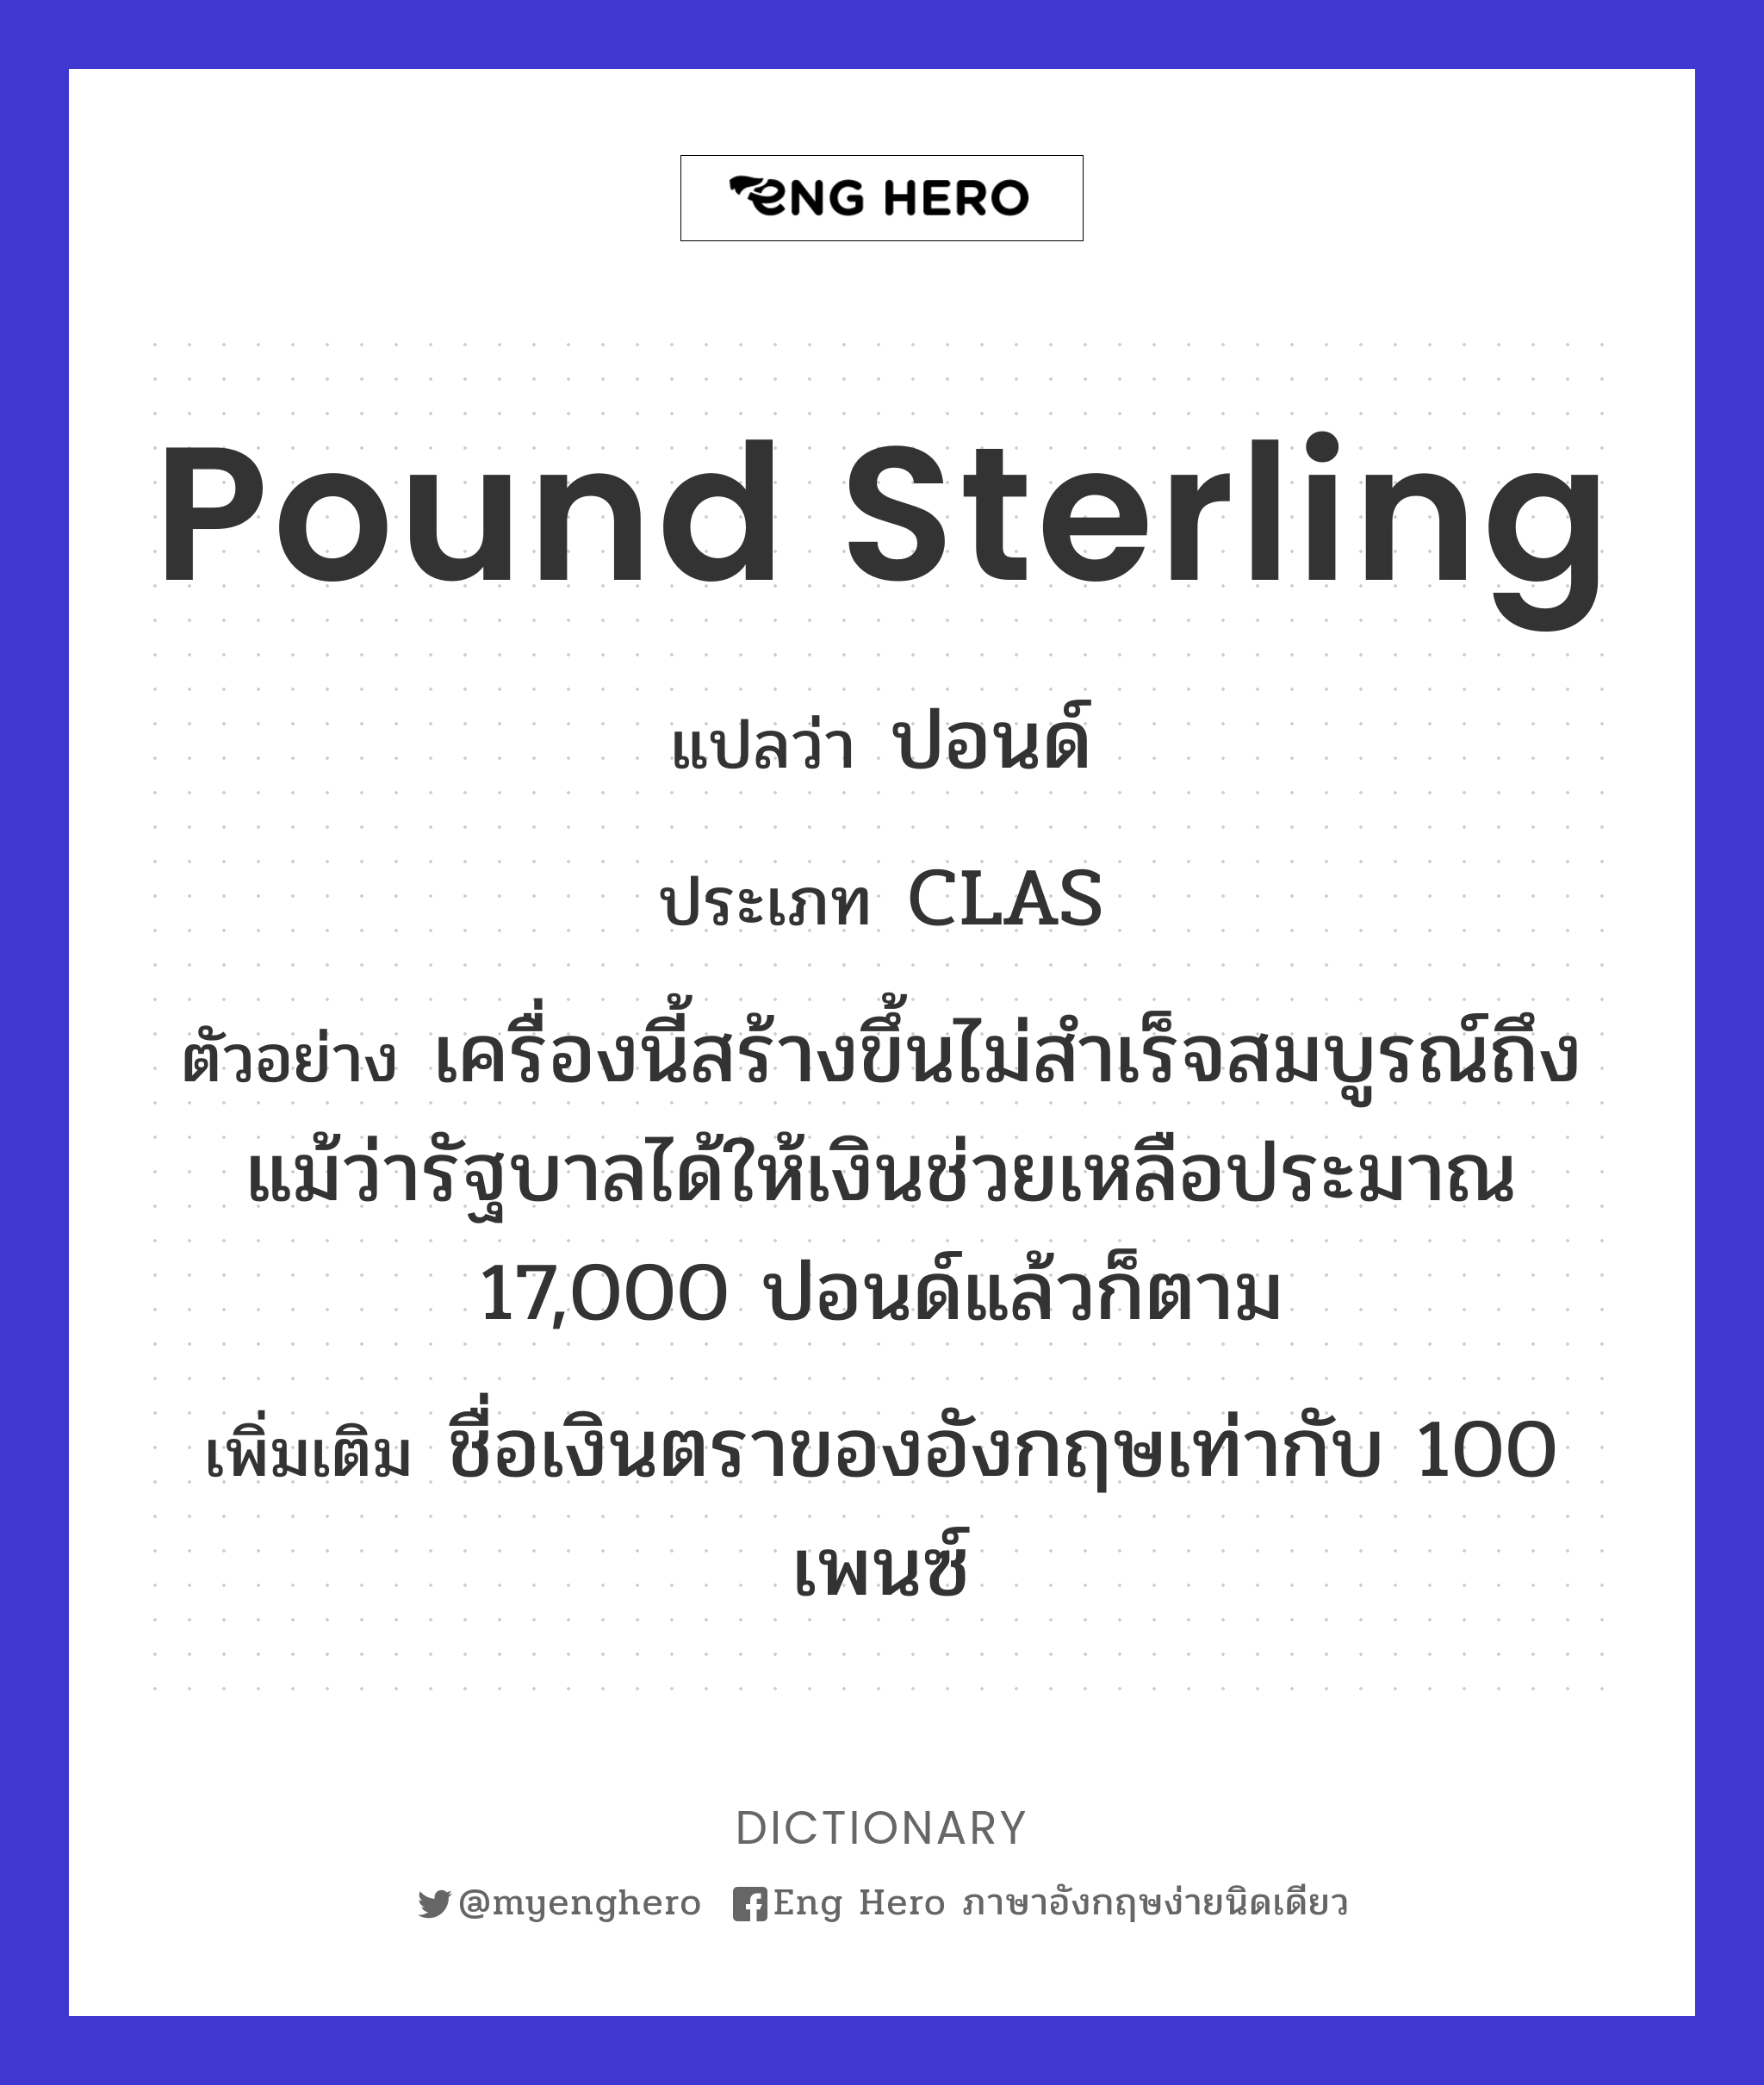 pound sterling